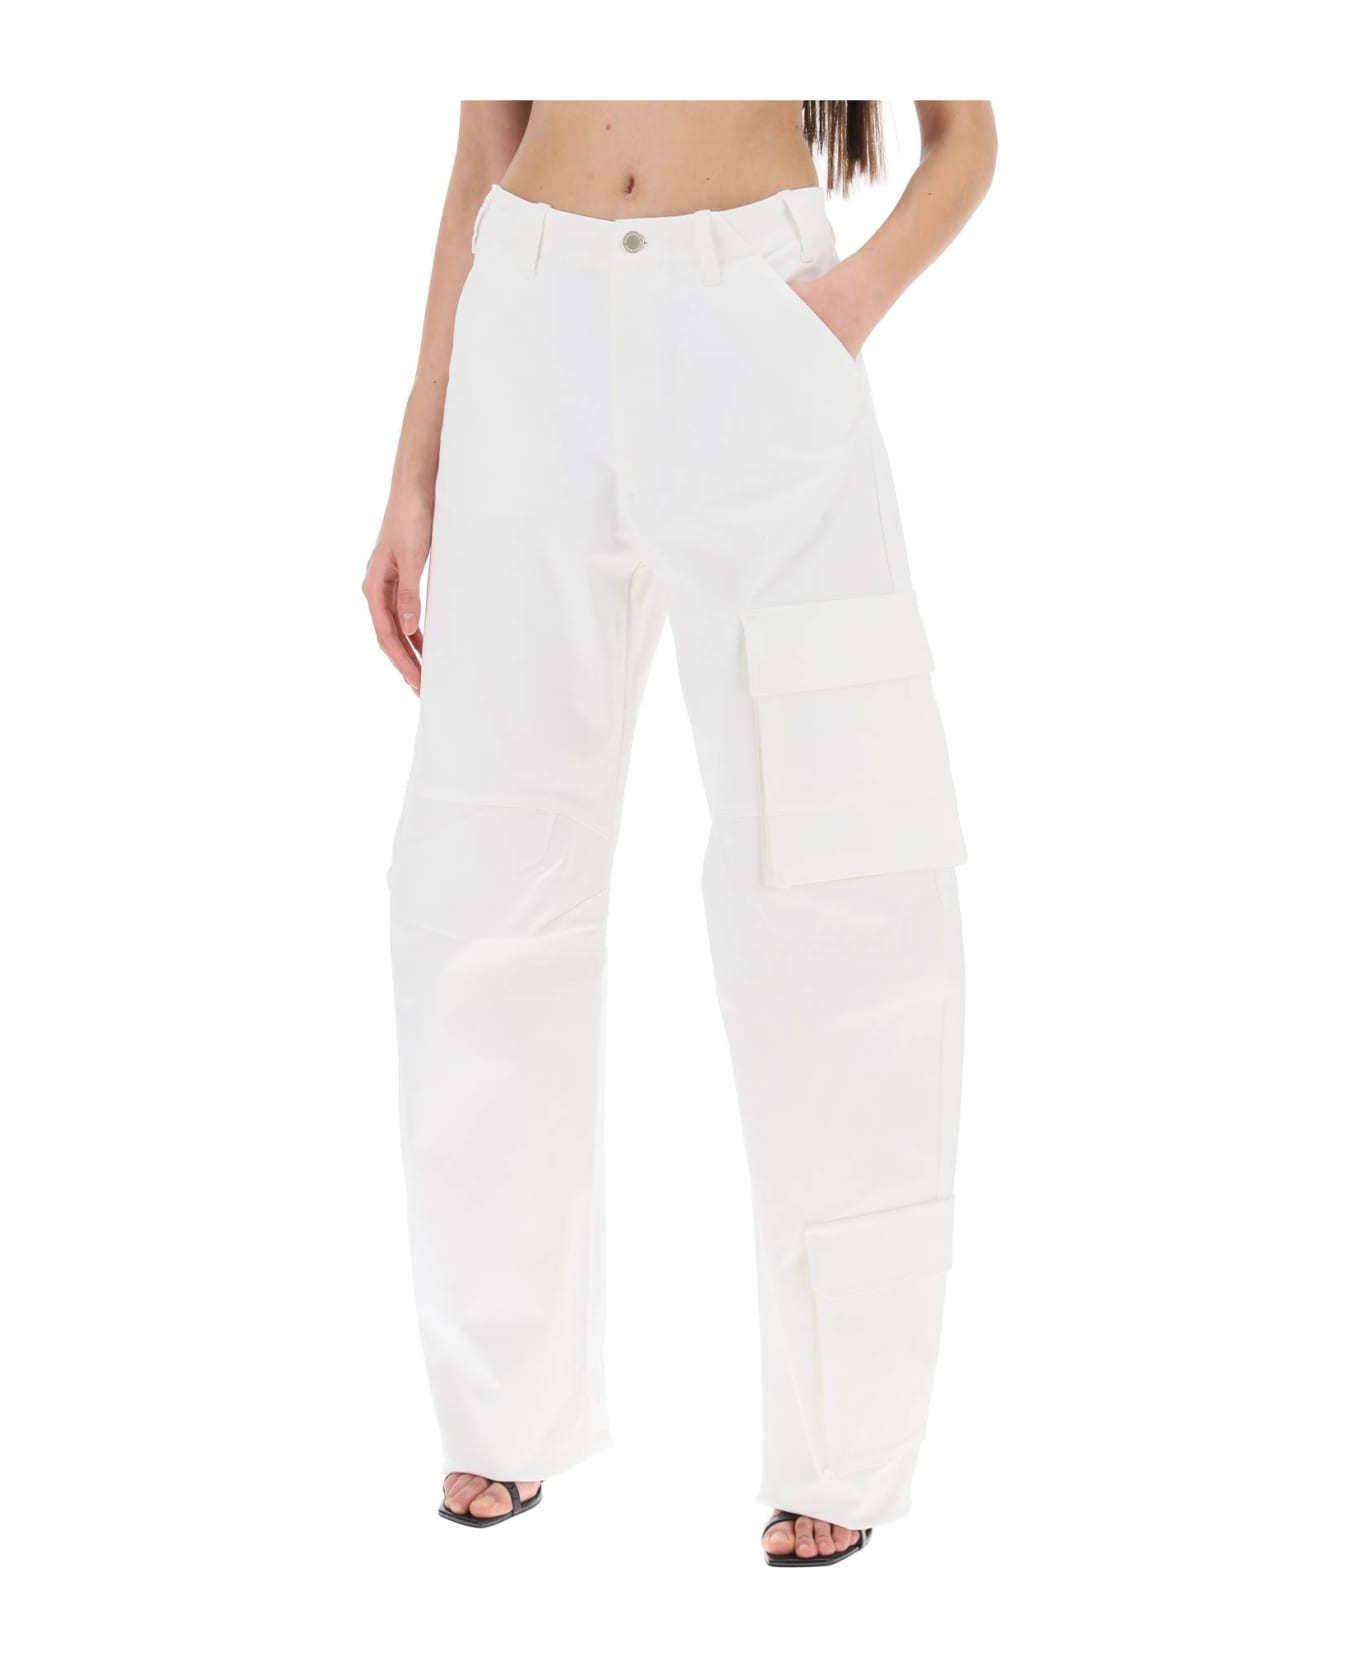 DARKPARK Rose Cargo Pants - WHITE (White)